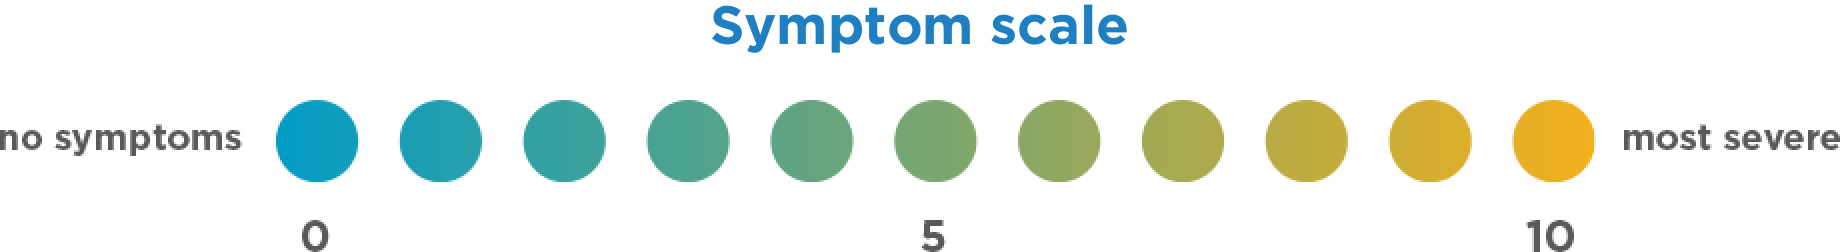 Symptom Scale